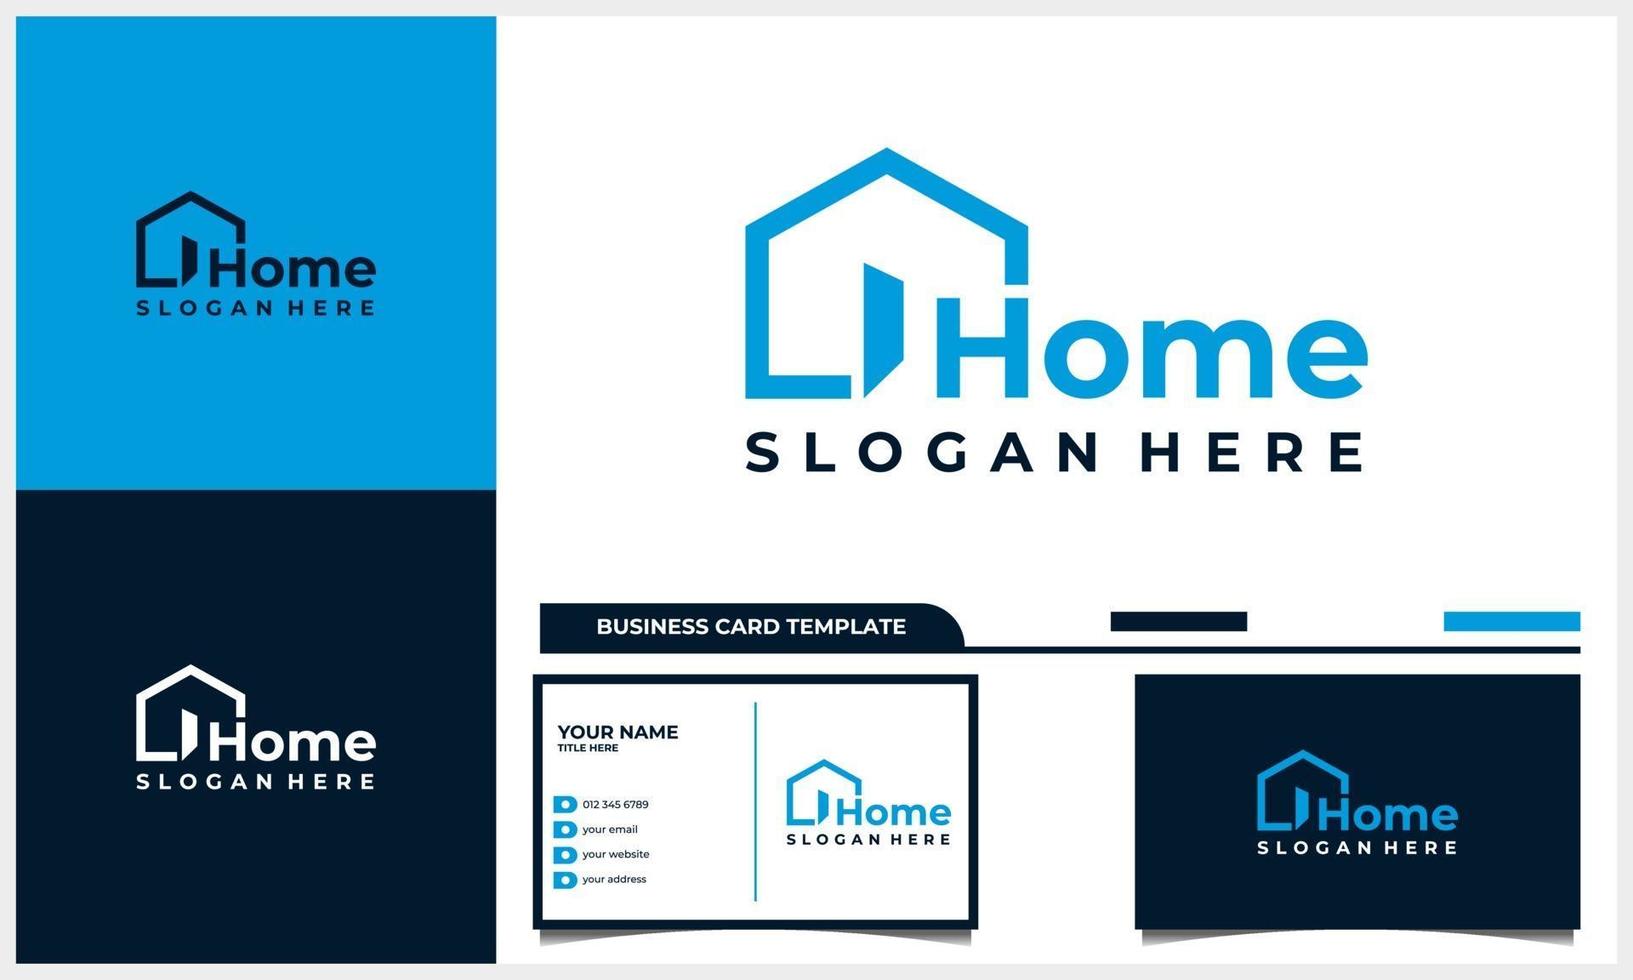 Home symbol concept open door, building enter, real estate agency logo vector